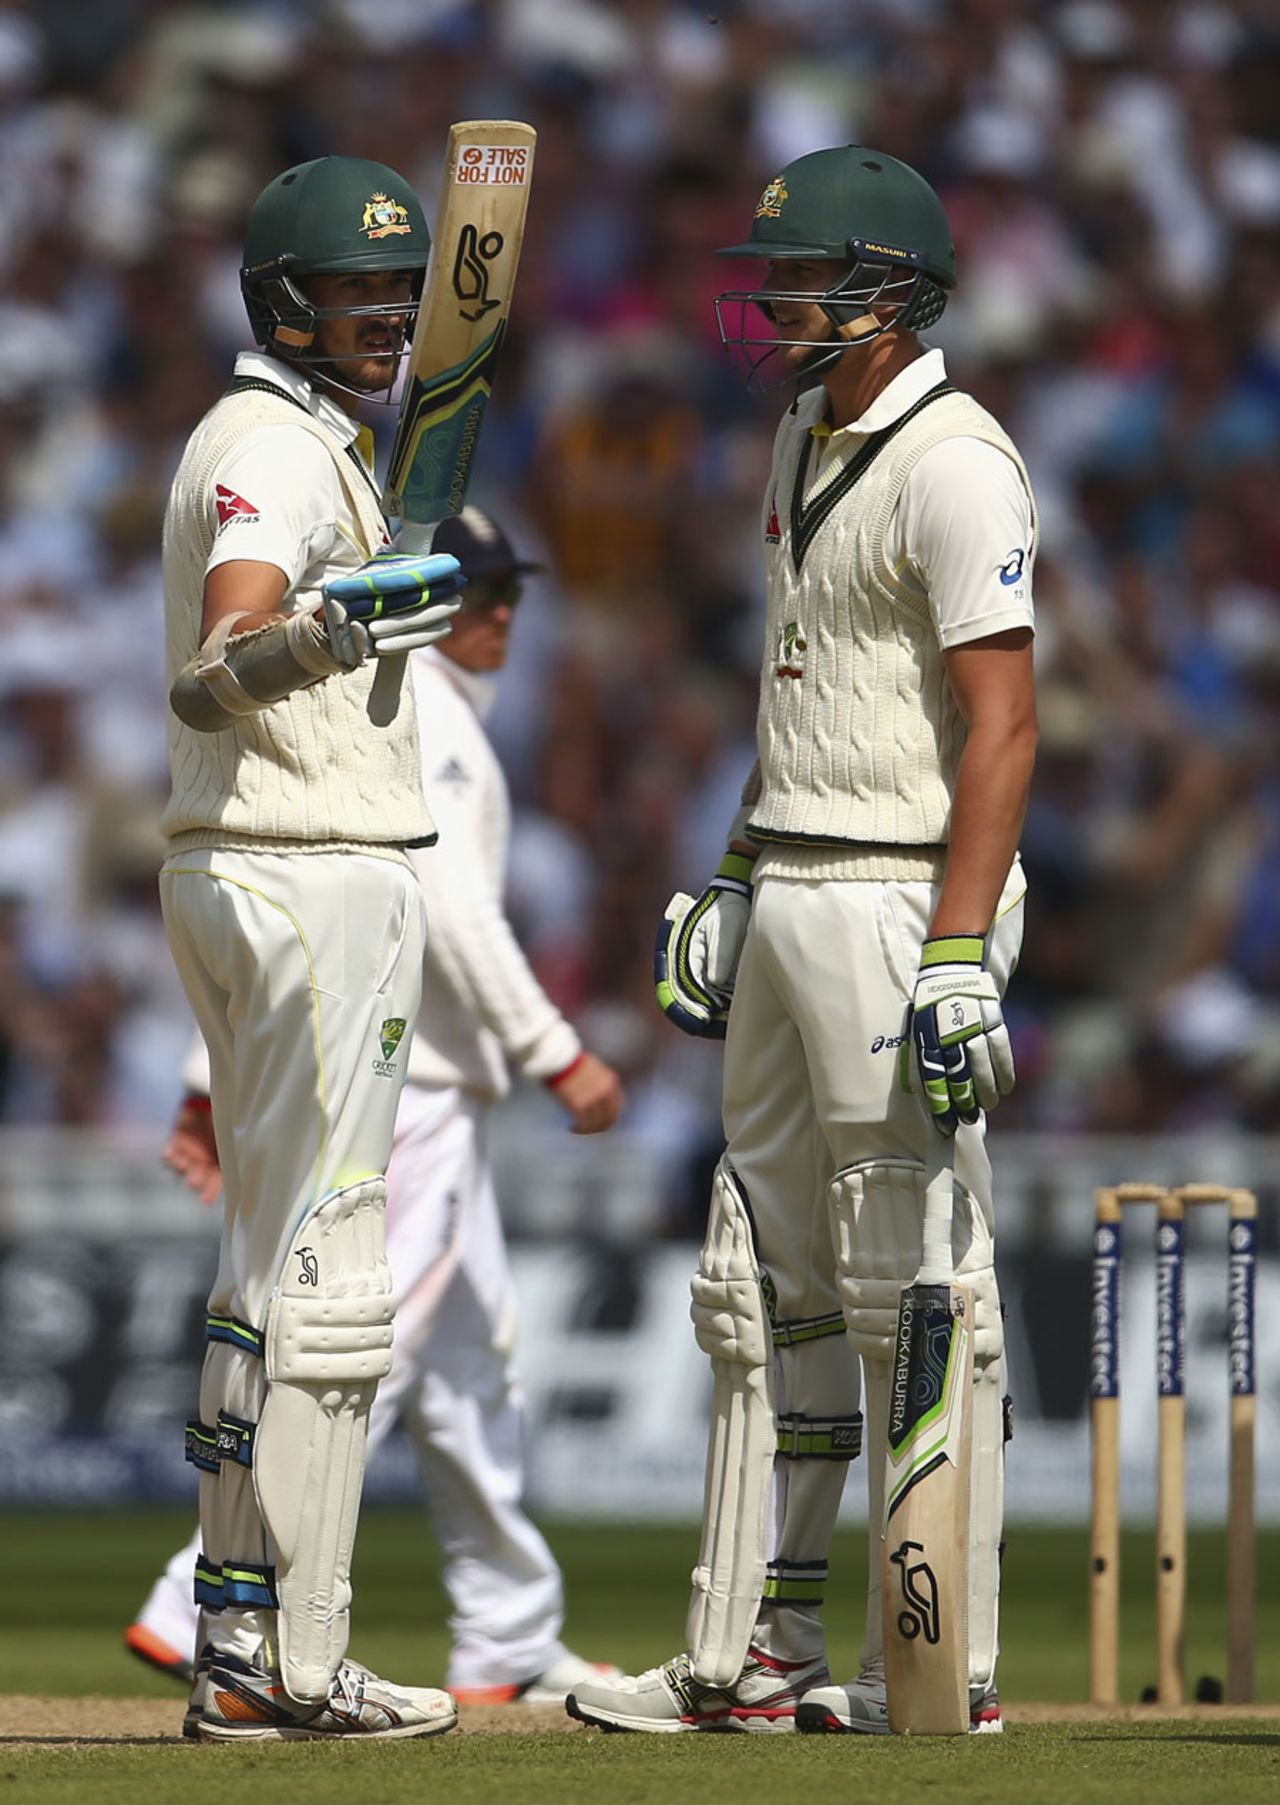 Mitchell Starc struck a battling fifty, England v Australia, 3rd Test, Edgbaston, 3rd day, July 31, 2015